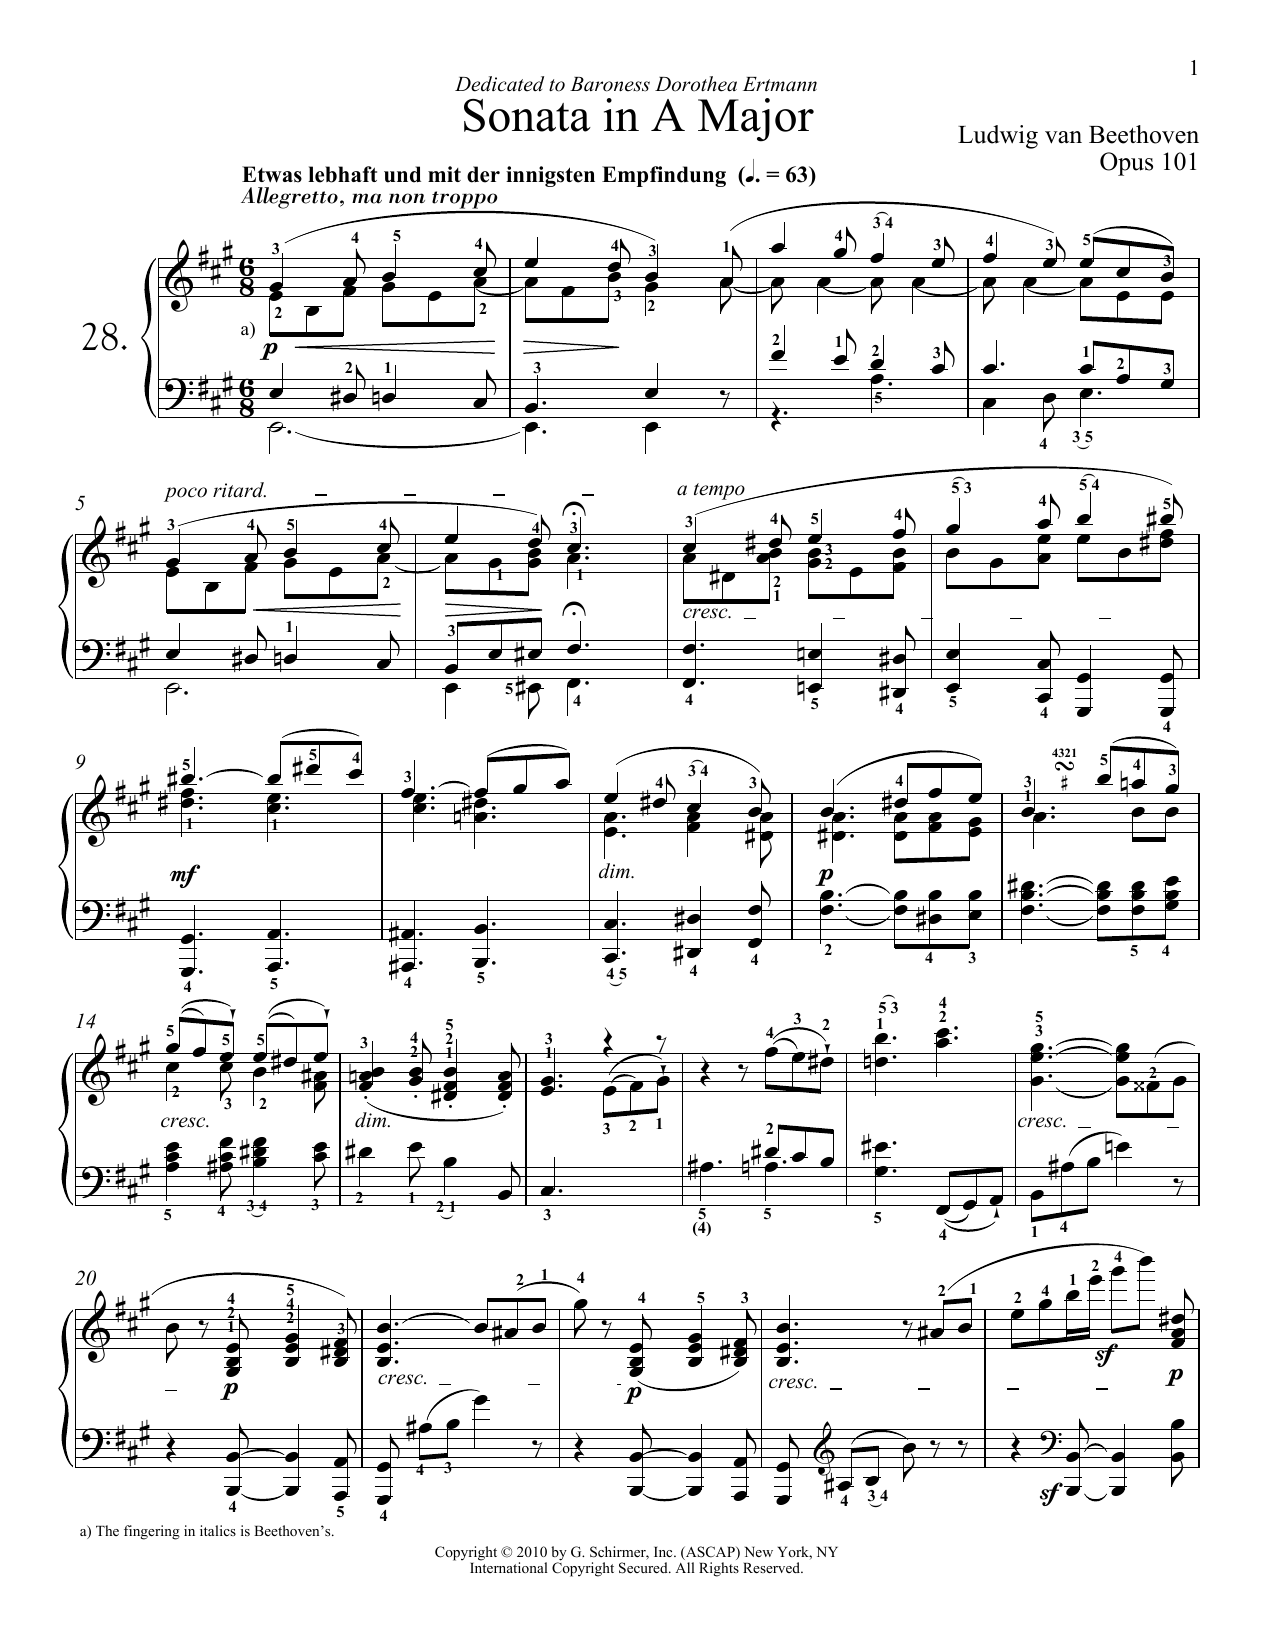 Ludwig van Beethoven Piano Sonata No. 28 In A Major, Op. 101 Sheet Music Notes & Chords for Piano - Download or Print PDF